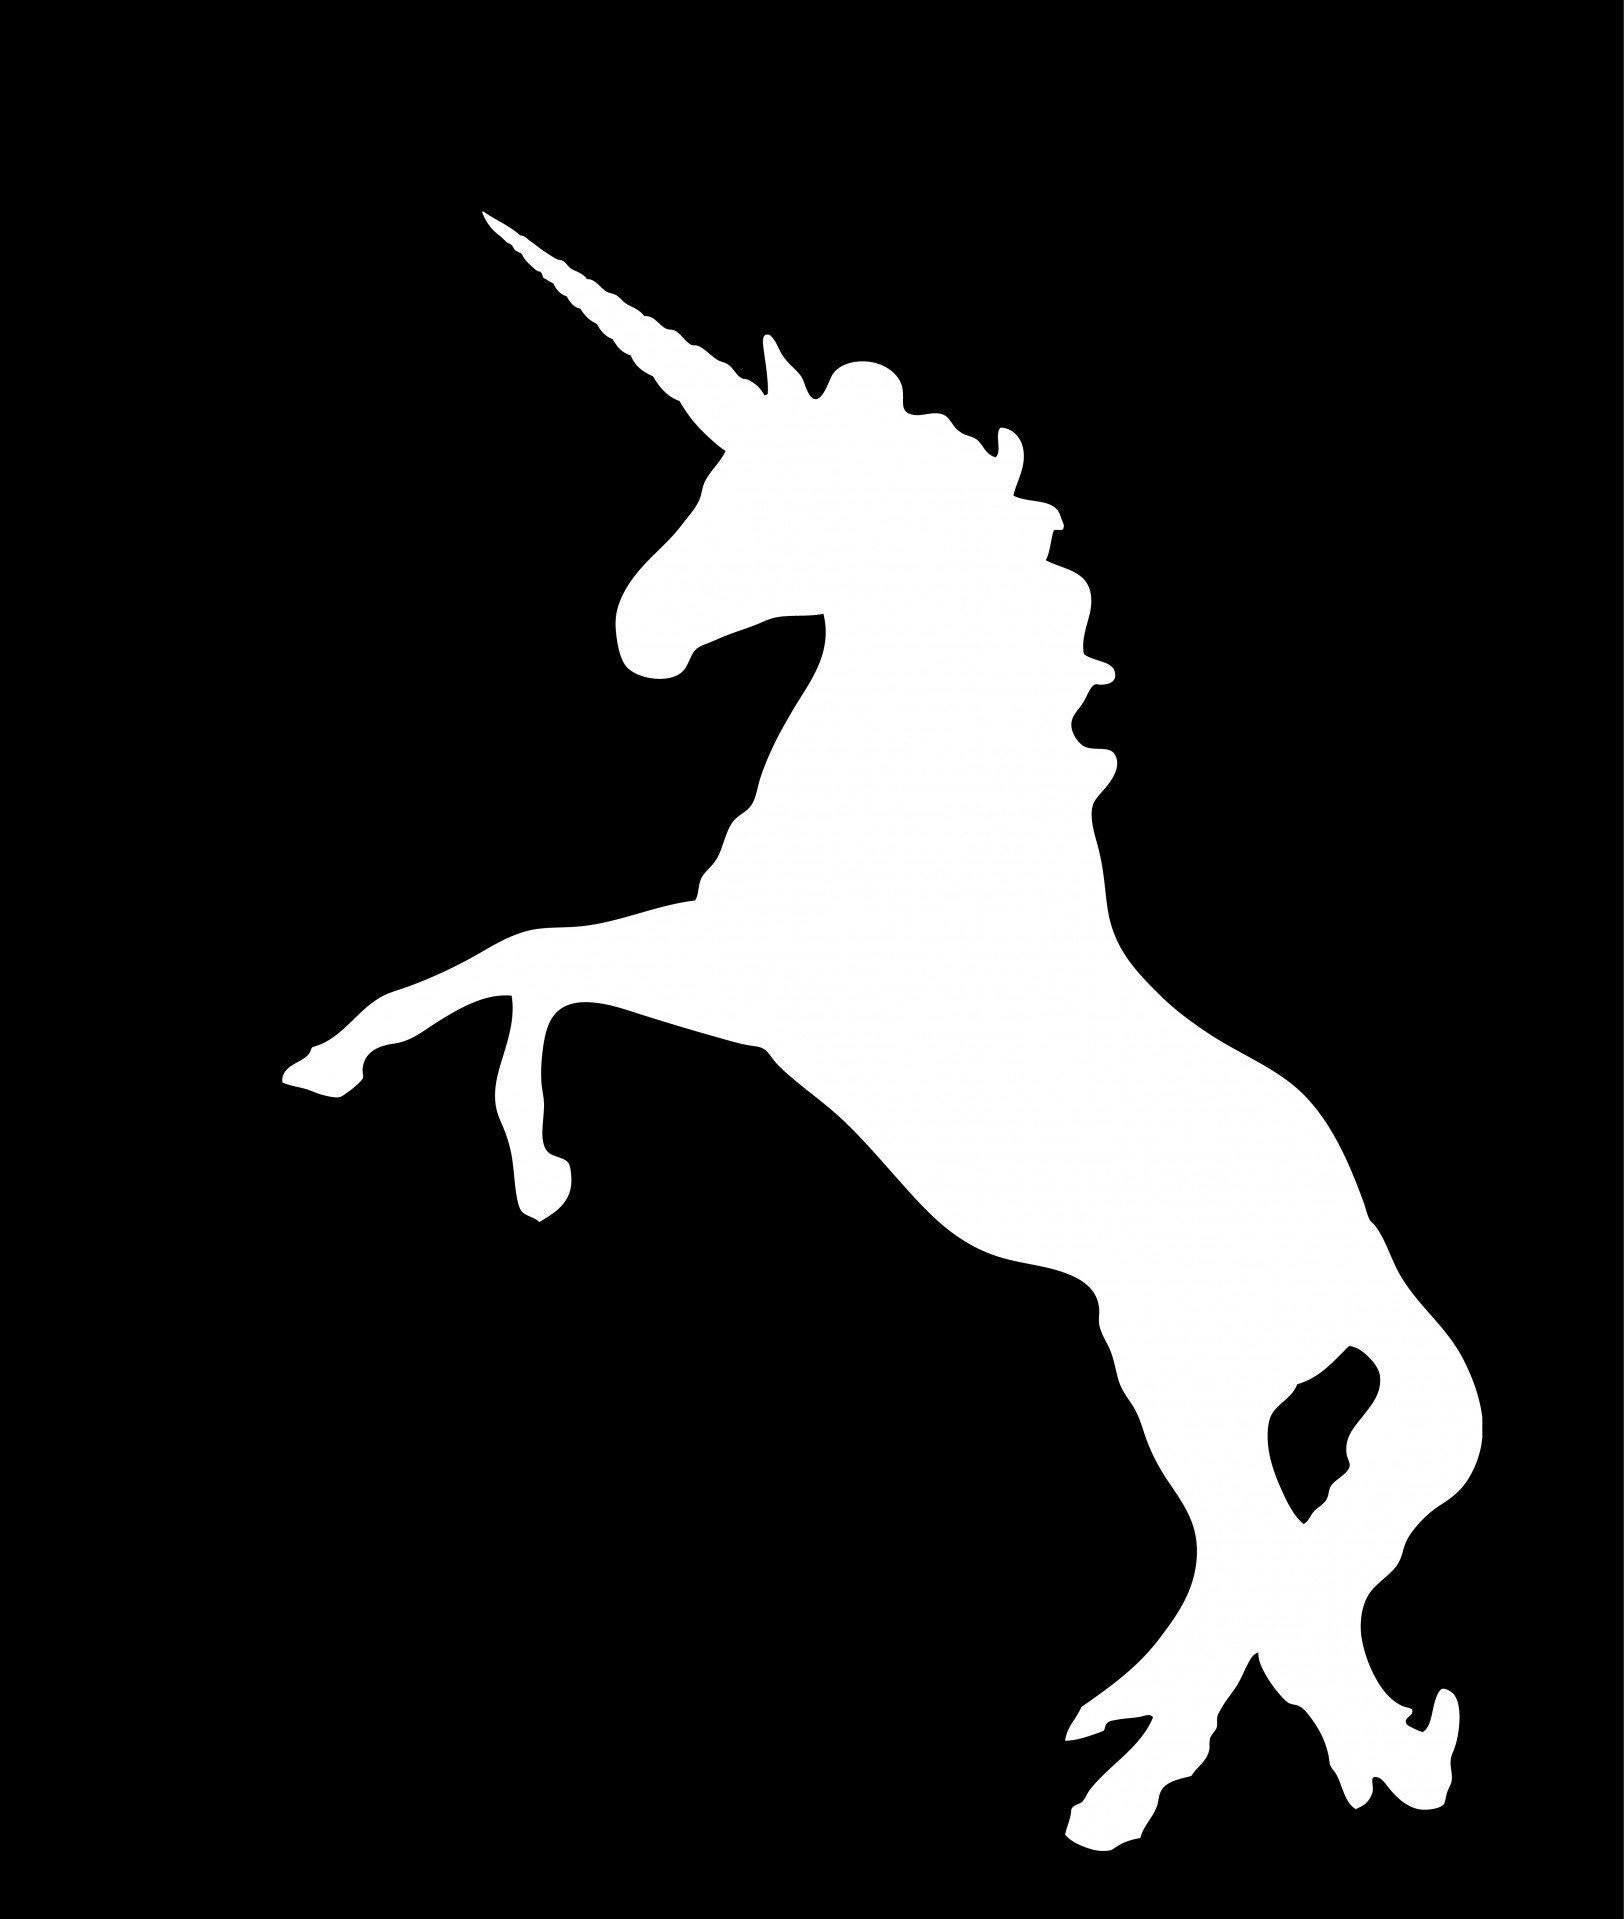 unicorn clipart black and white - photo #10